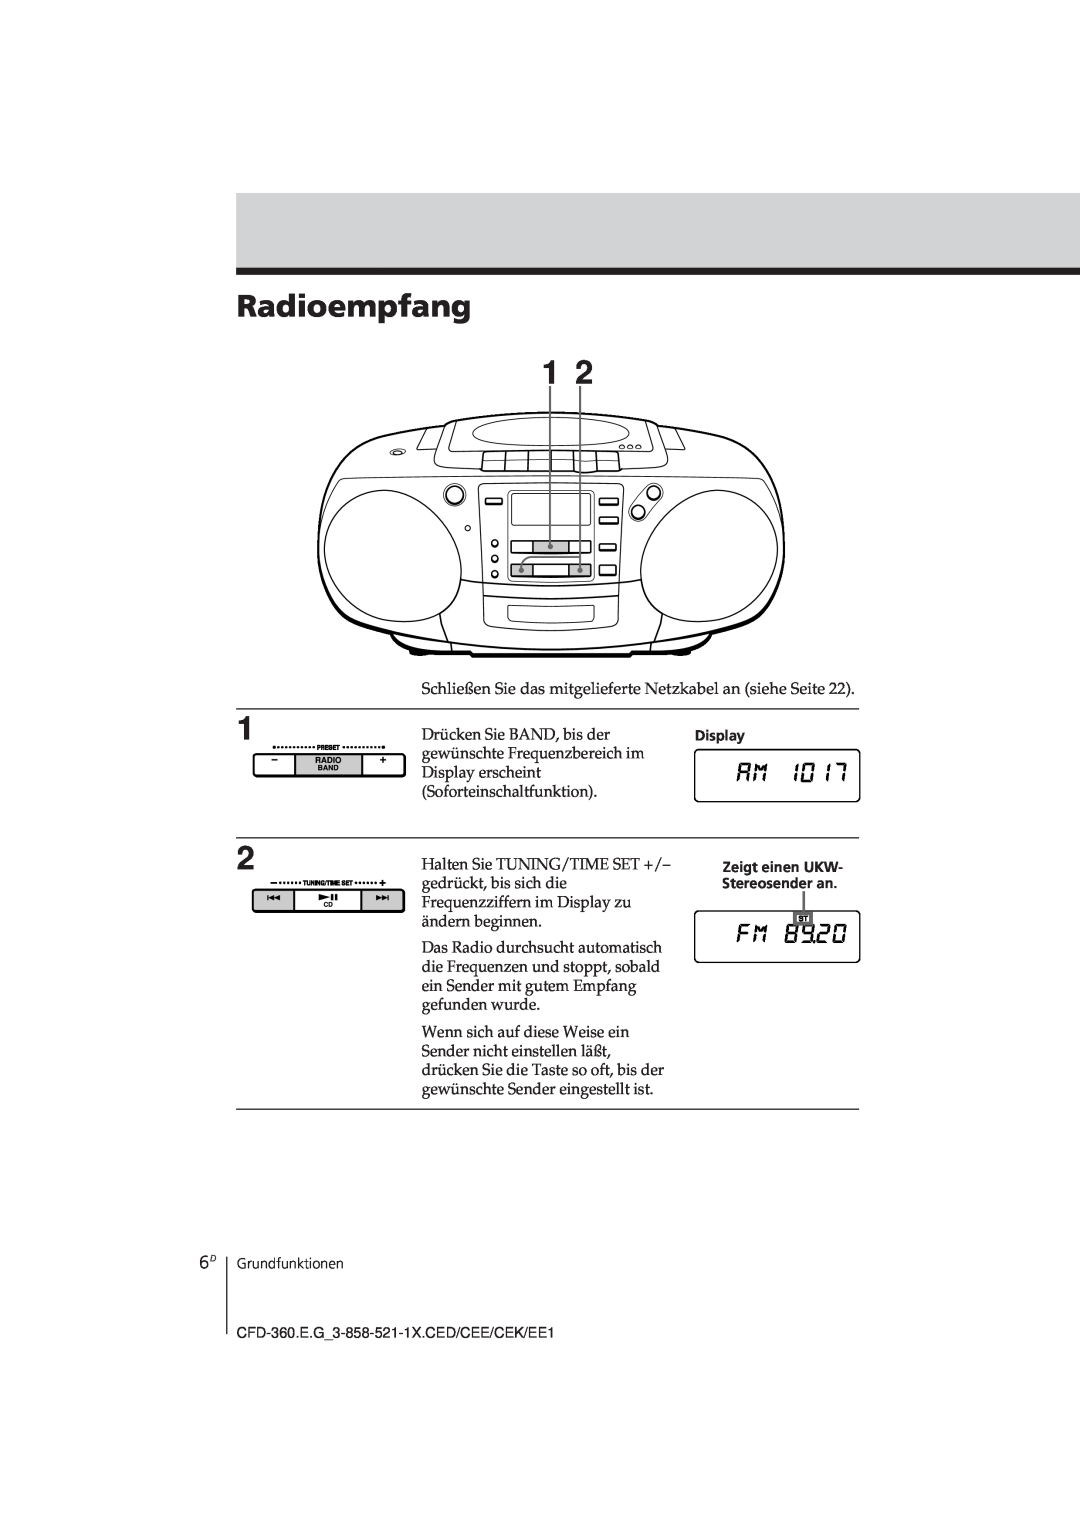 Sony CFD-360 operating instructions Radioempfang 